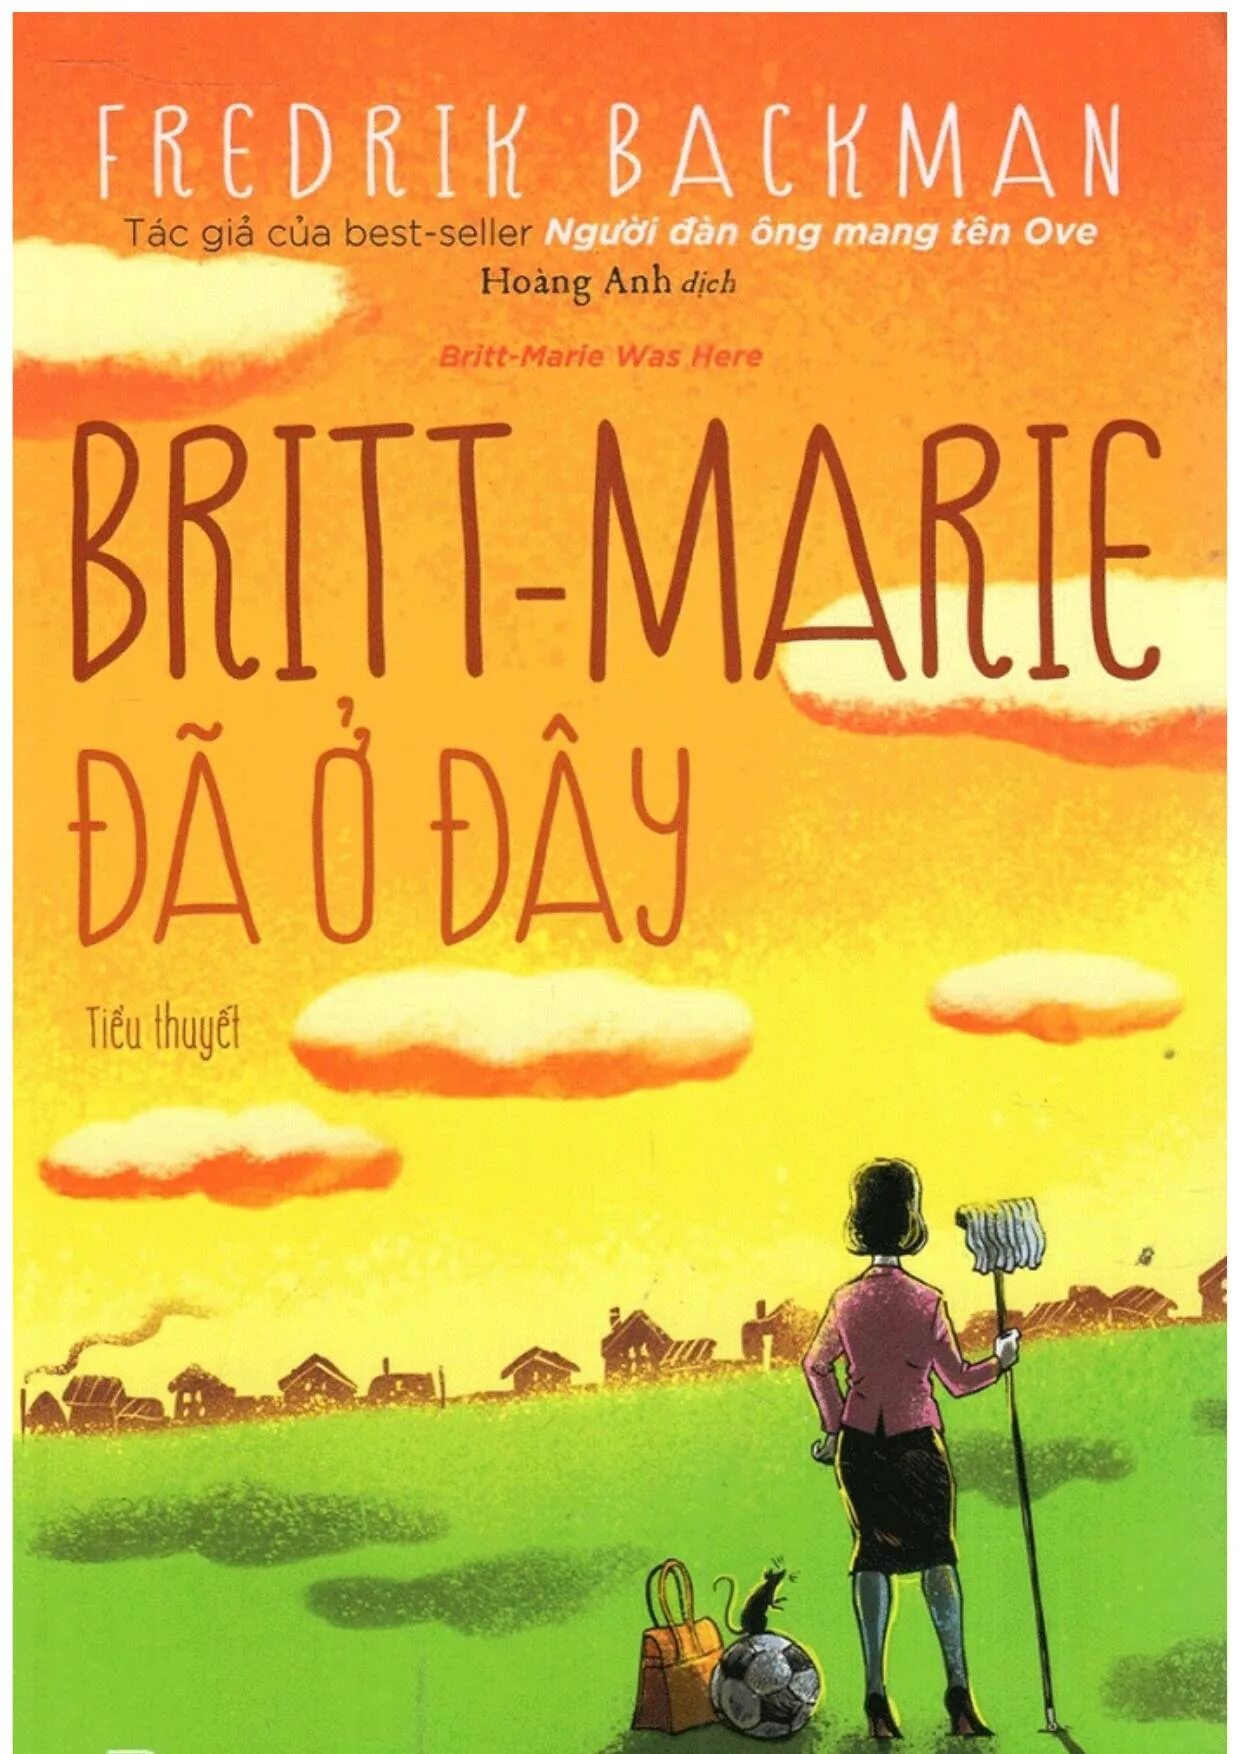 Книга here. Бритт Мари. Britt-Marie was here книга. Здесь была Бритт-Мари книга. Фредерик Бакман Бритт Мари.